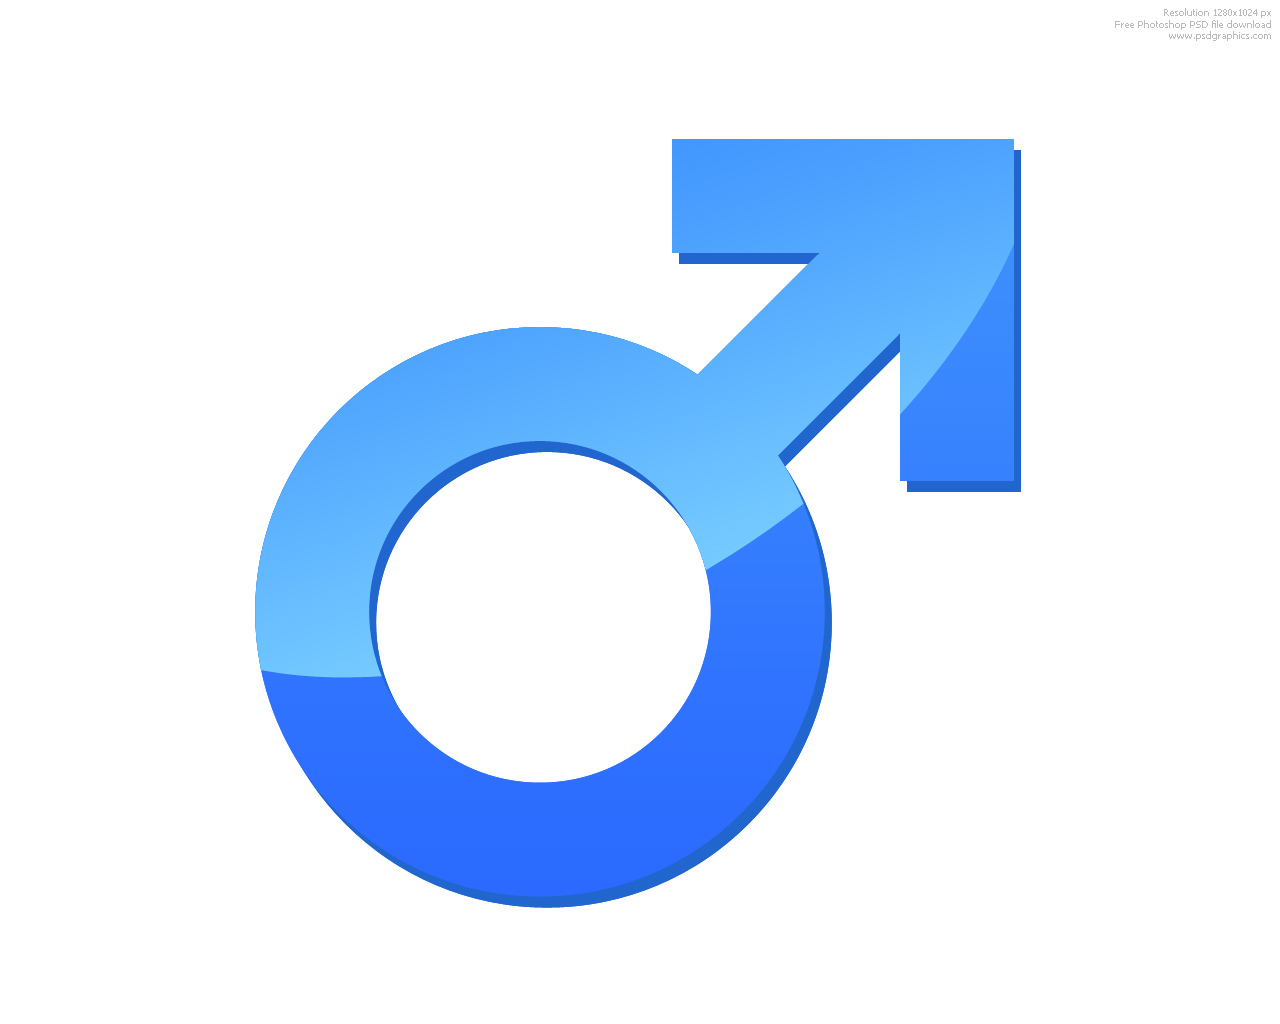 Gender Symbol For Female - ClipArt Best